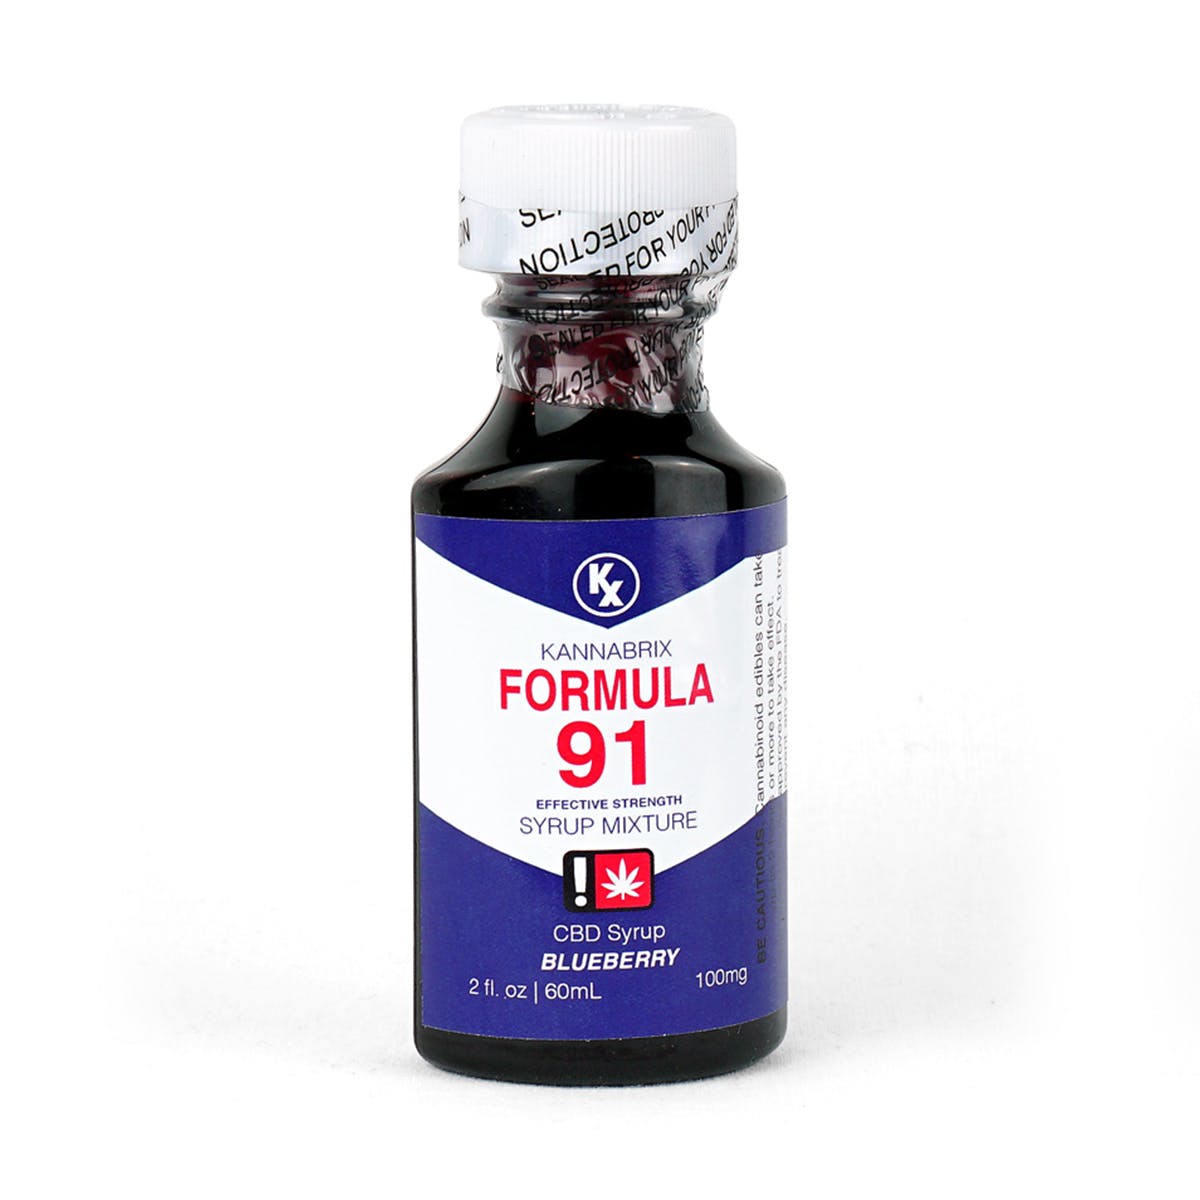 tincture-kannabrix-blueberry-formula-91-cbd-syrup-100mg